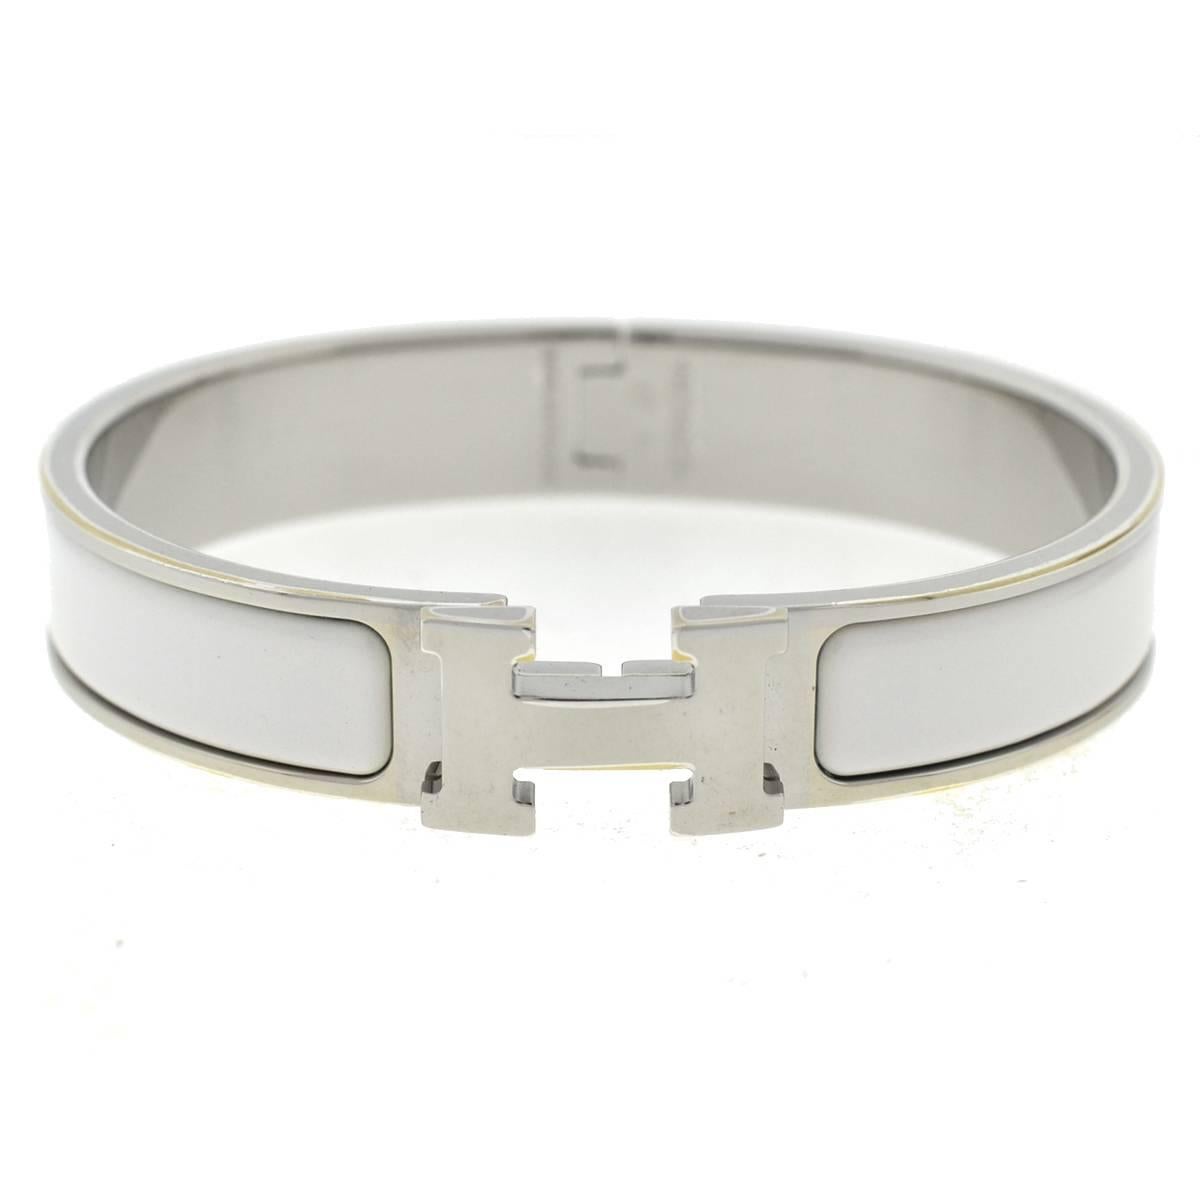 Company - HERMES
Style - H Clic Clac PM White Enamel Narrow Bangle Bracelet
Metal - Polished Silver Palladium
Circumference - 6.25